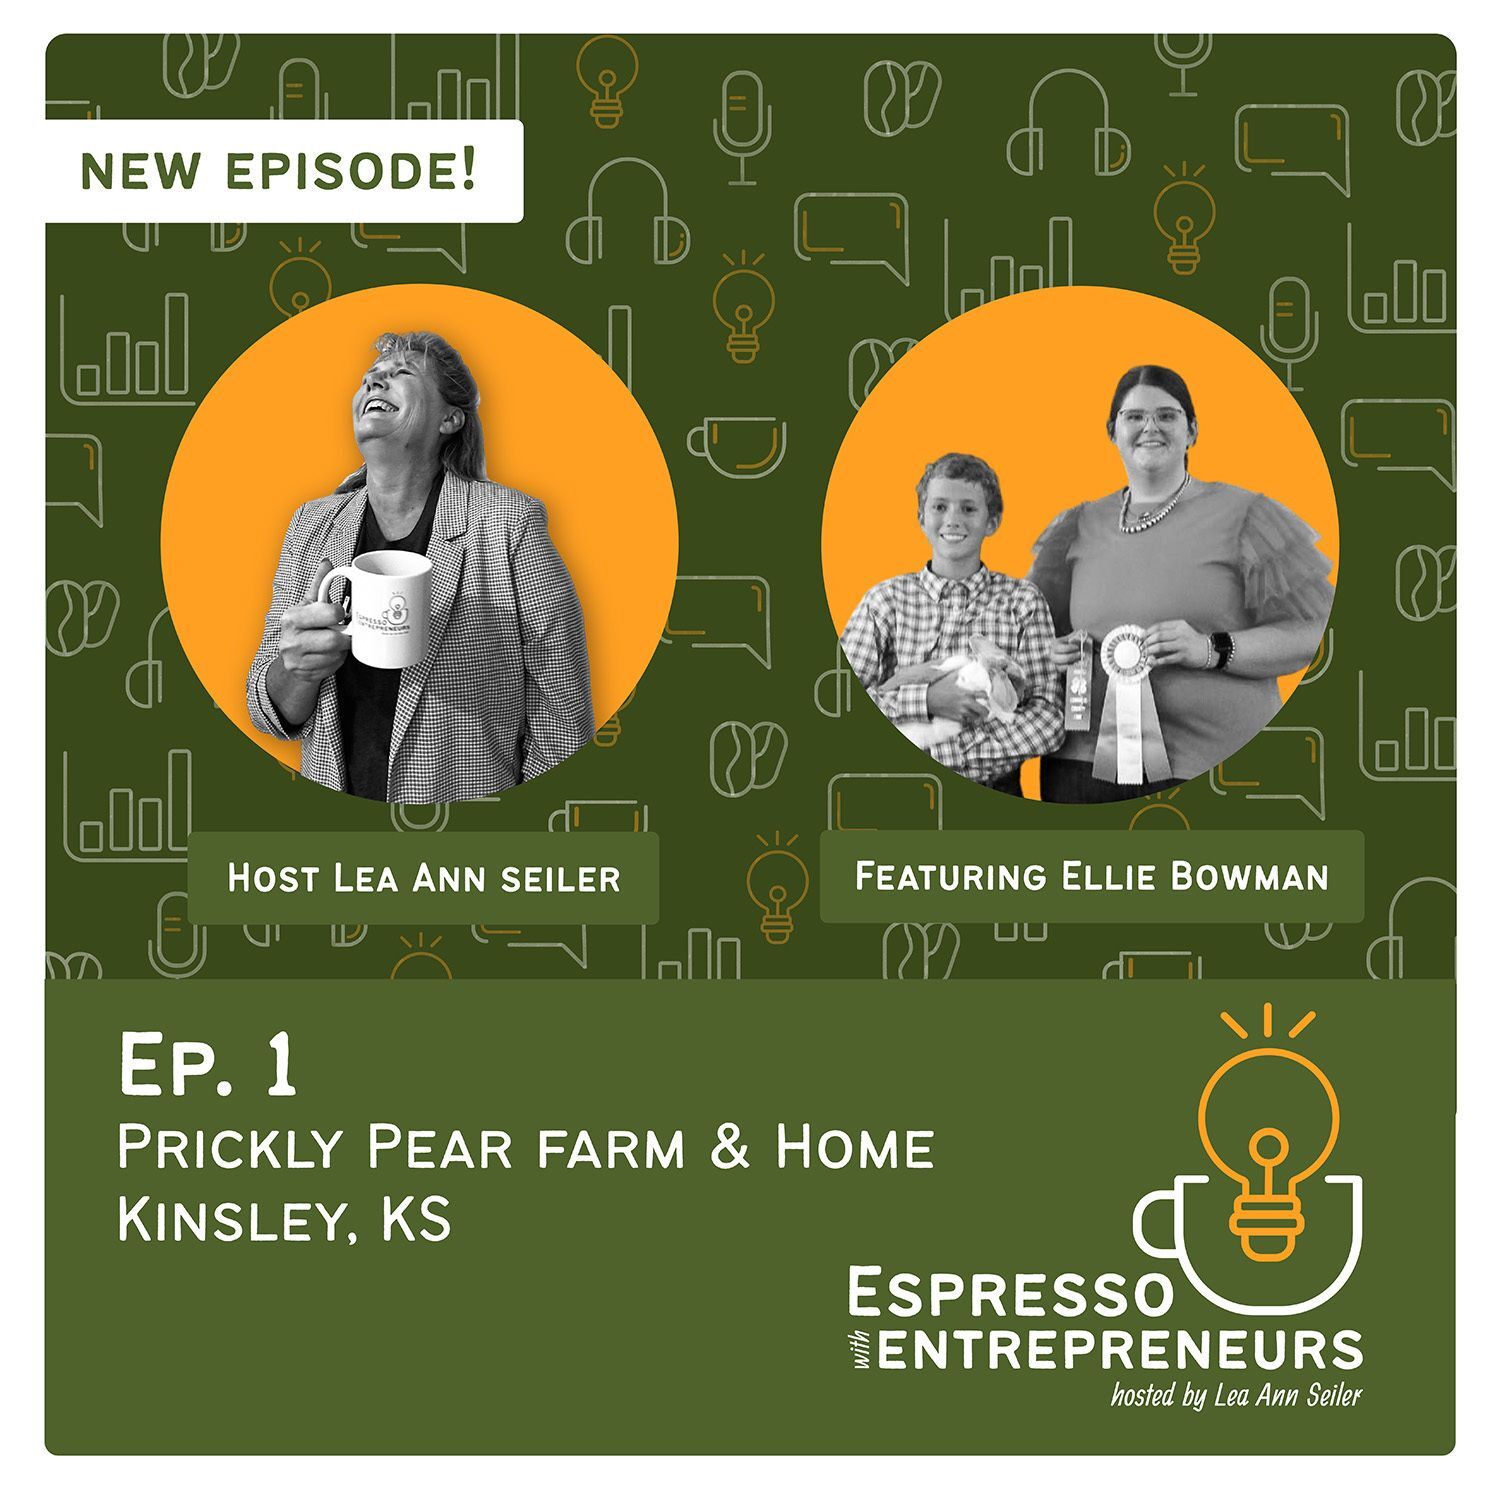 Espresso and Entrepreneurs: Prickly Pear Farm & Home